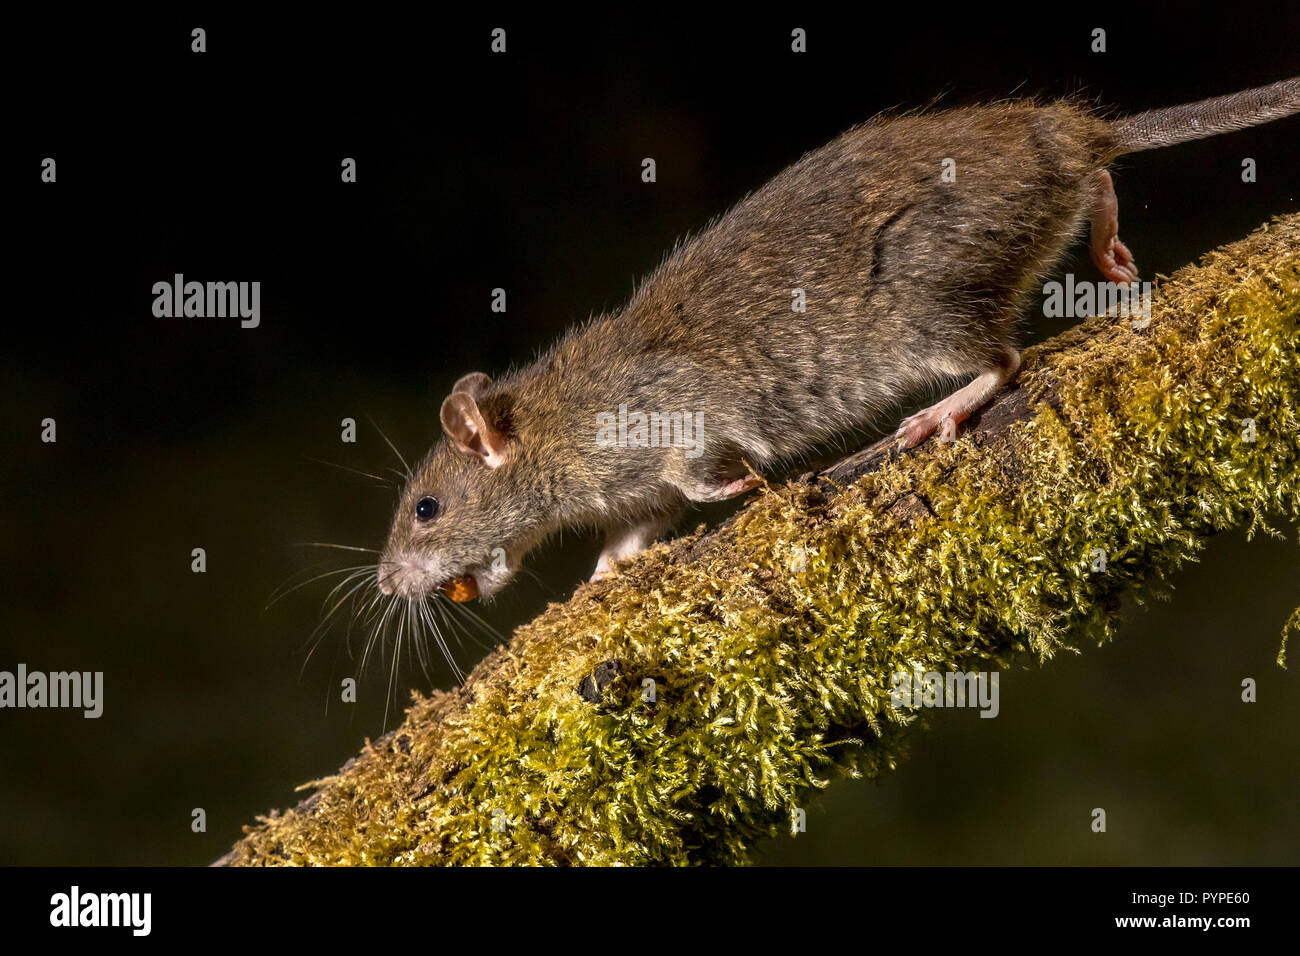 Wild Brown rat (Rattus norvegicus) running on log with stolen nut at night. High speed photography image Stock Photo